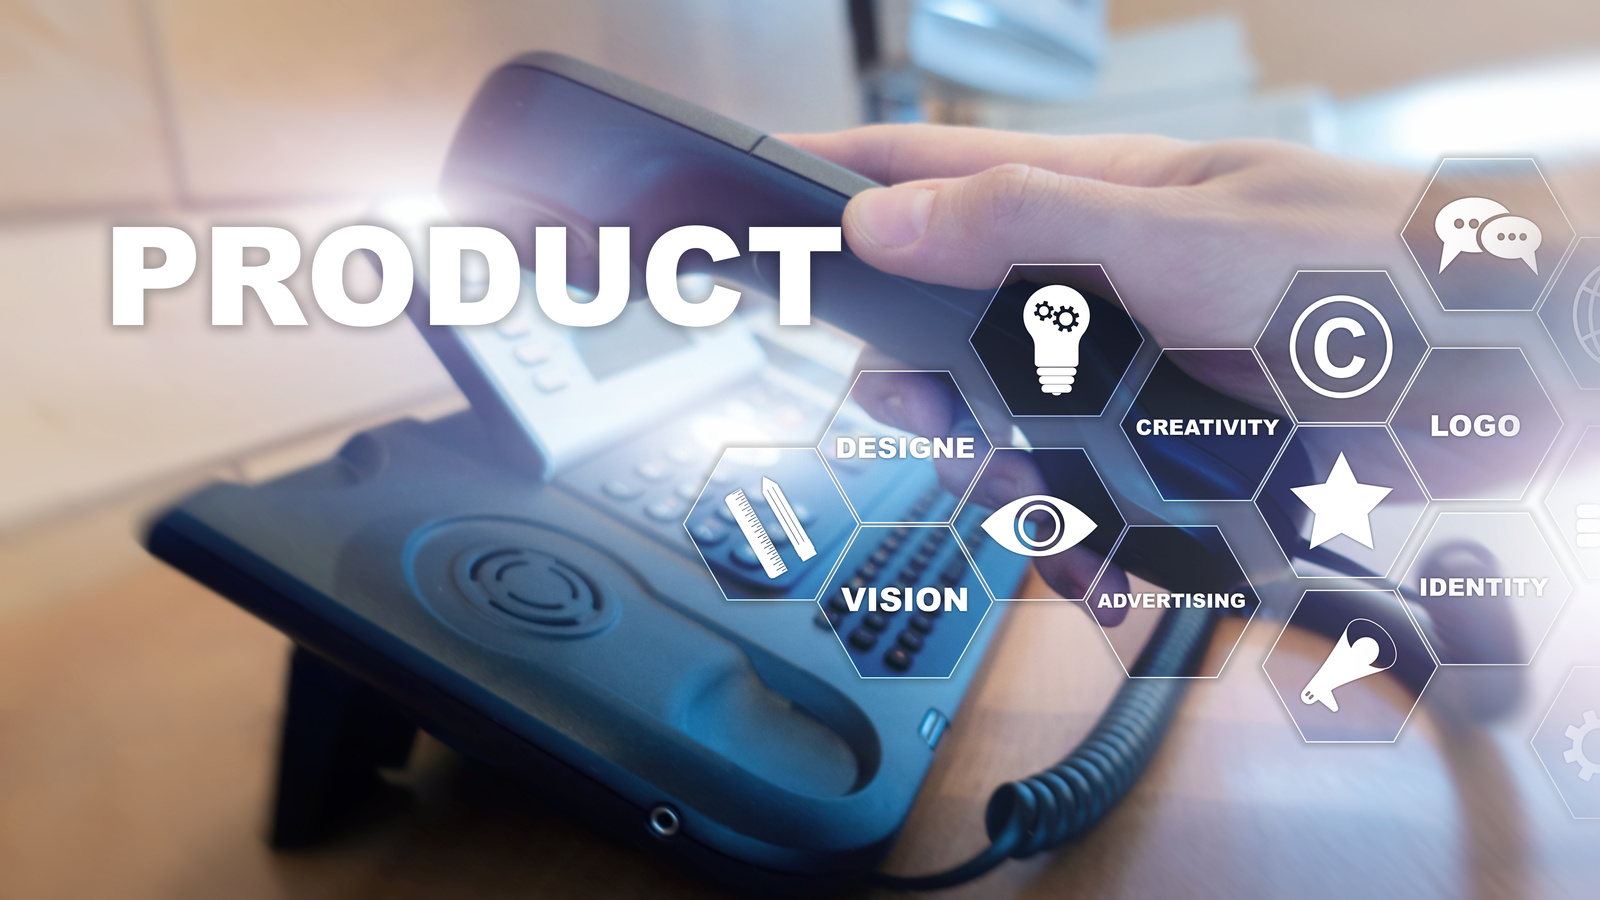 Business Product Promotion Design Concept. Double exposure background.